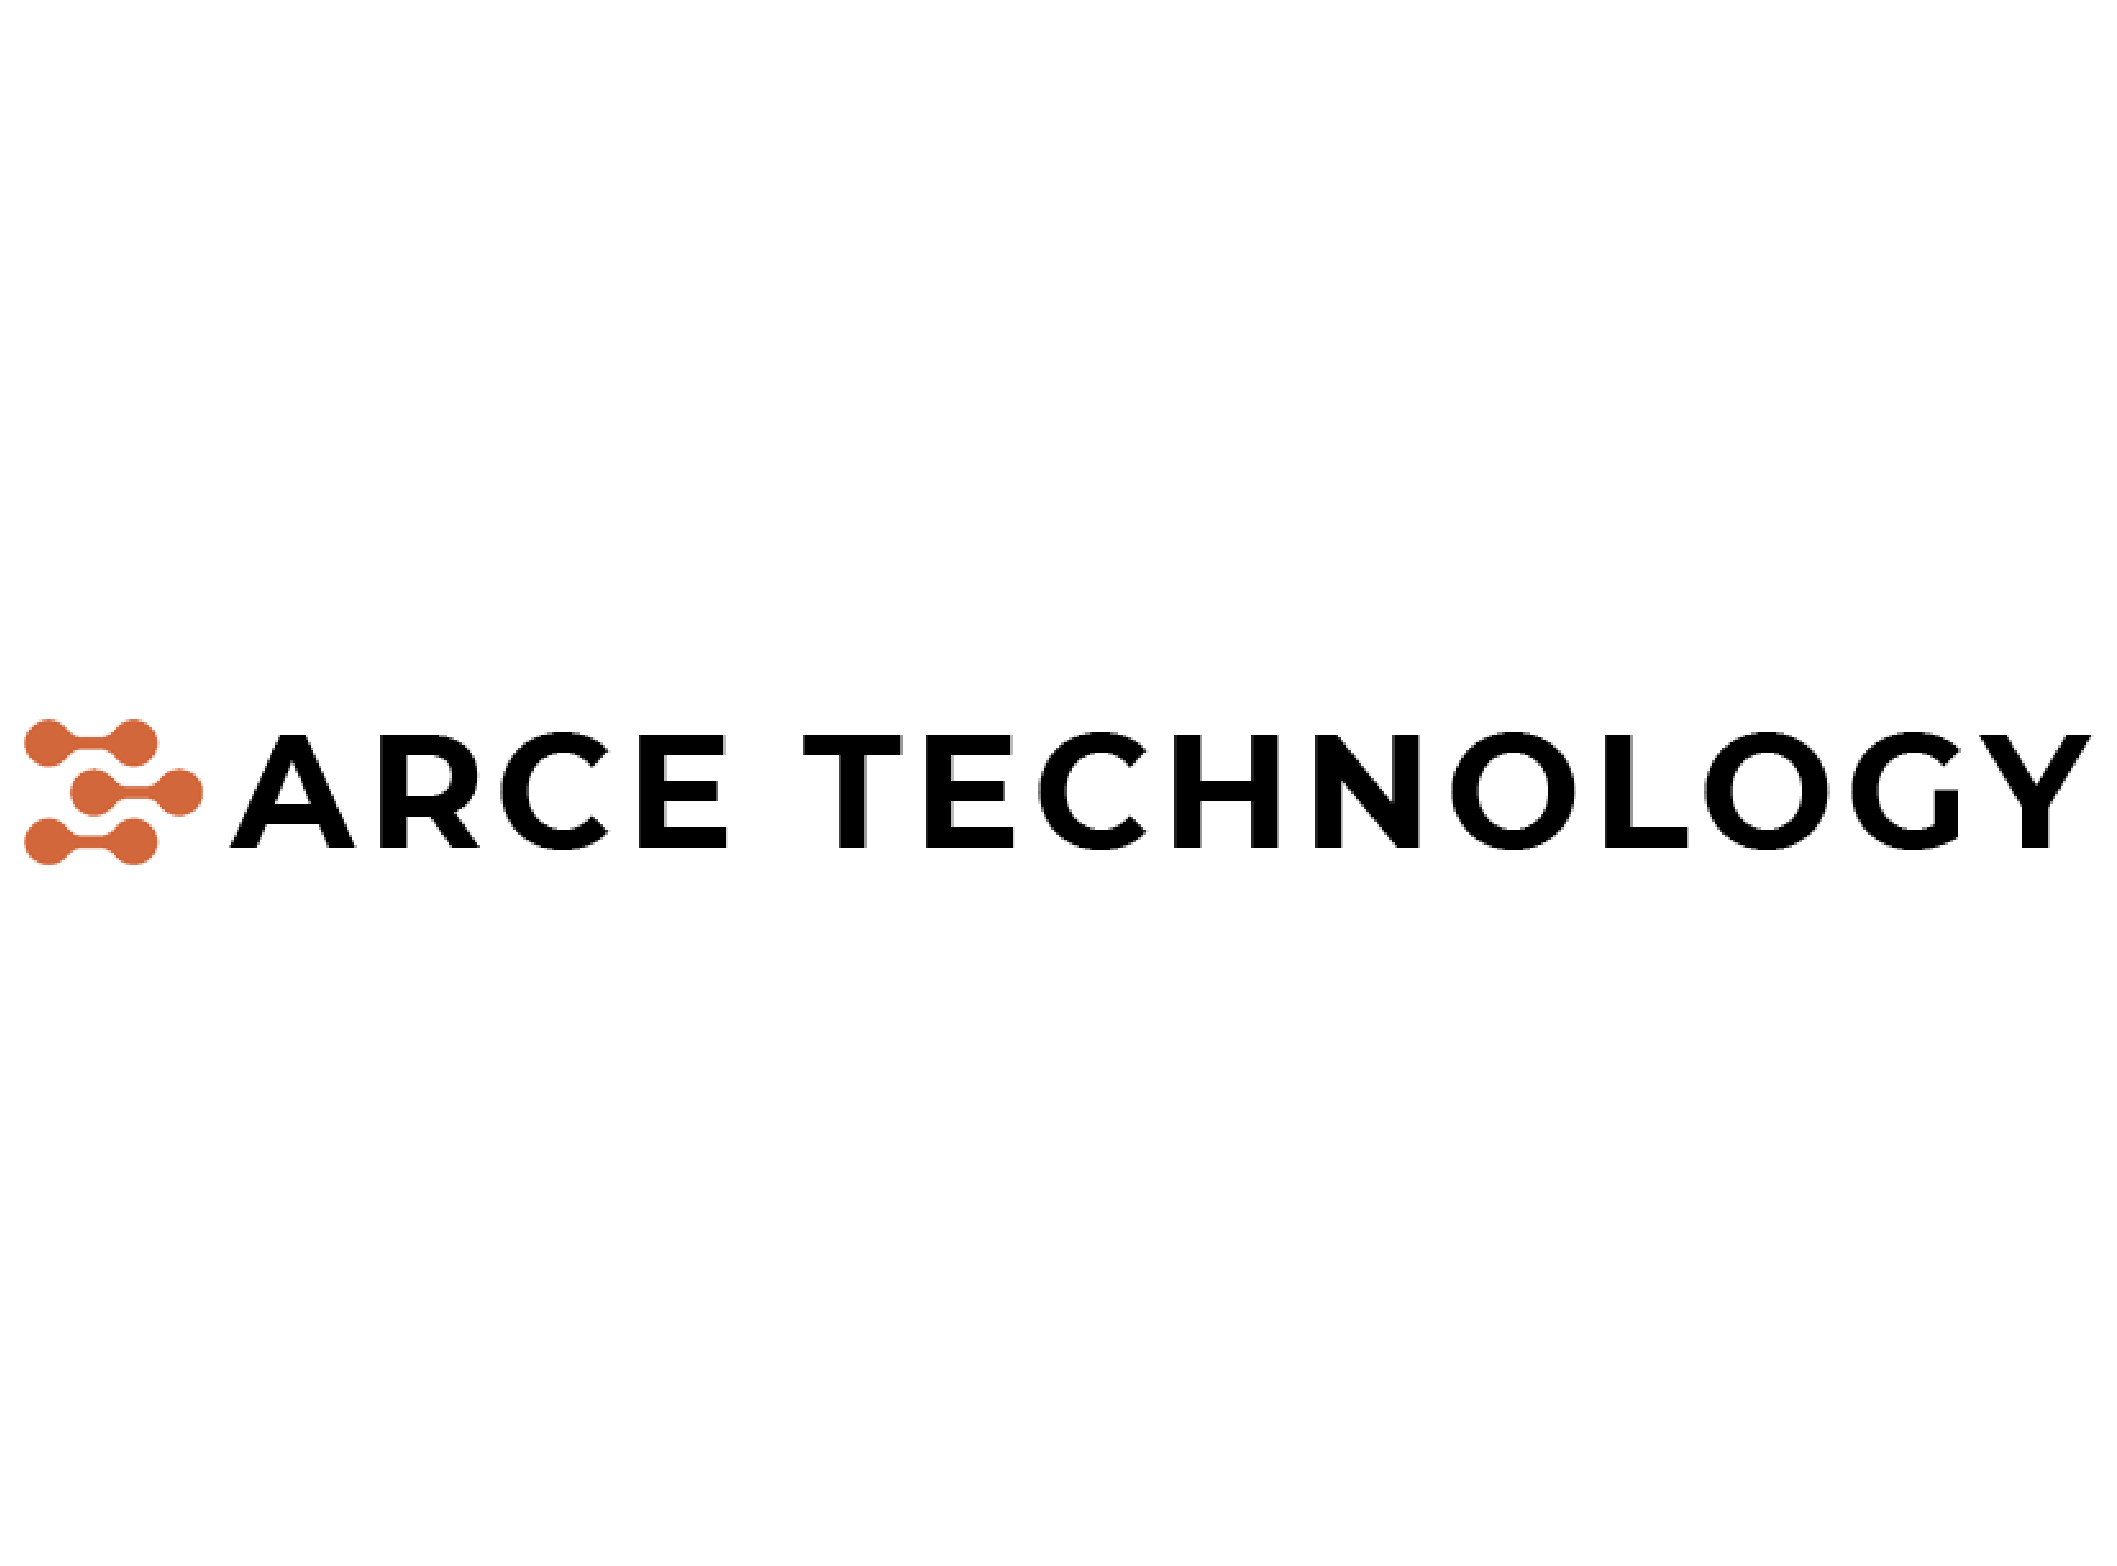 ARCE Technology